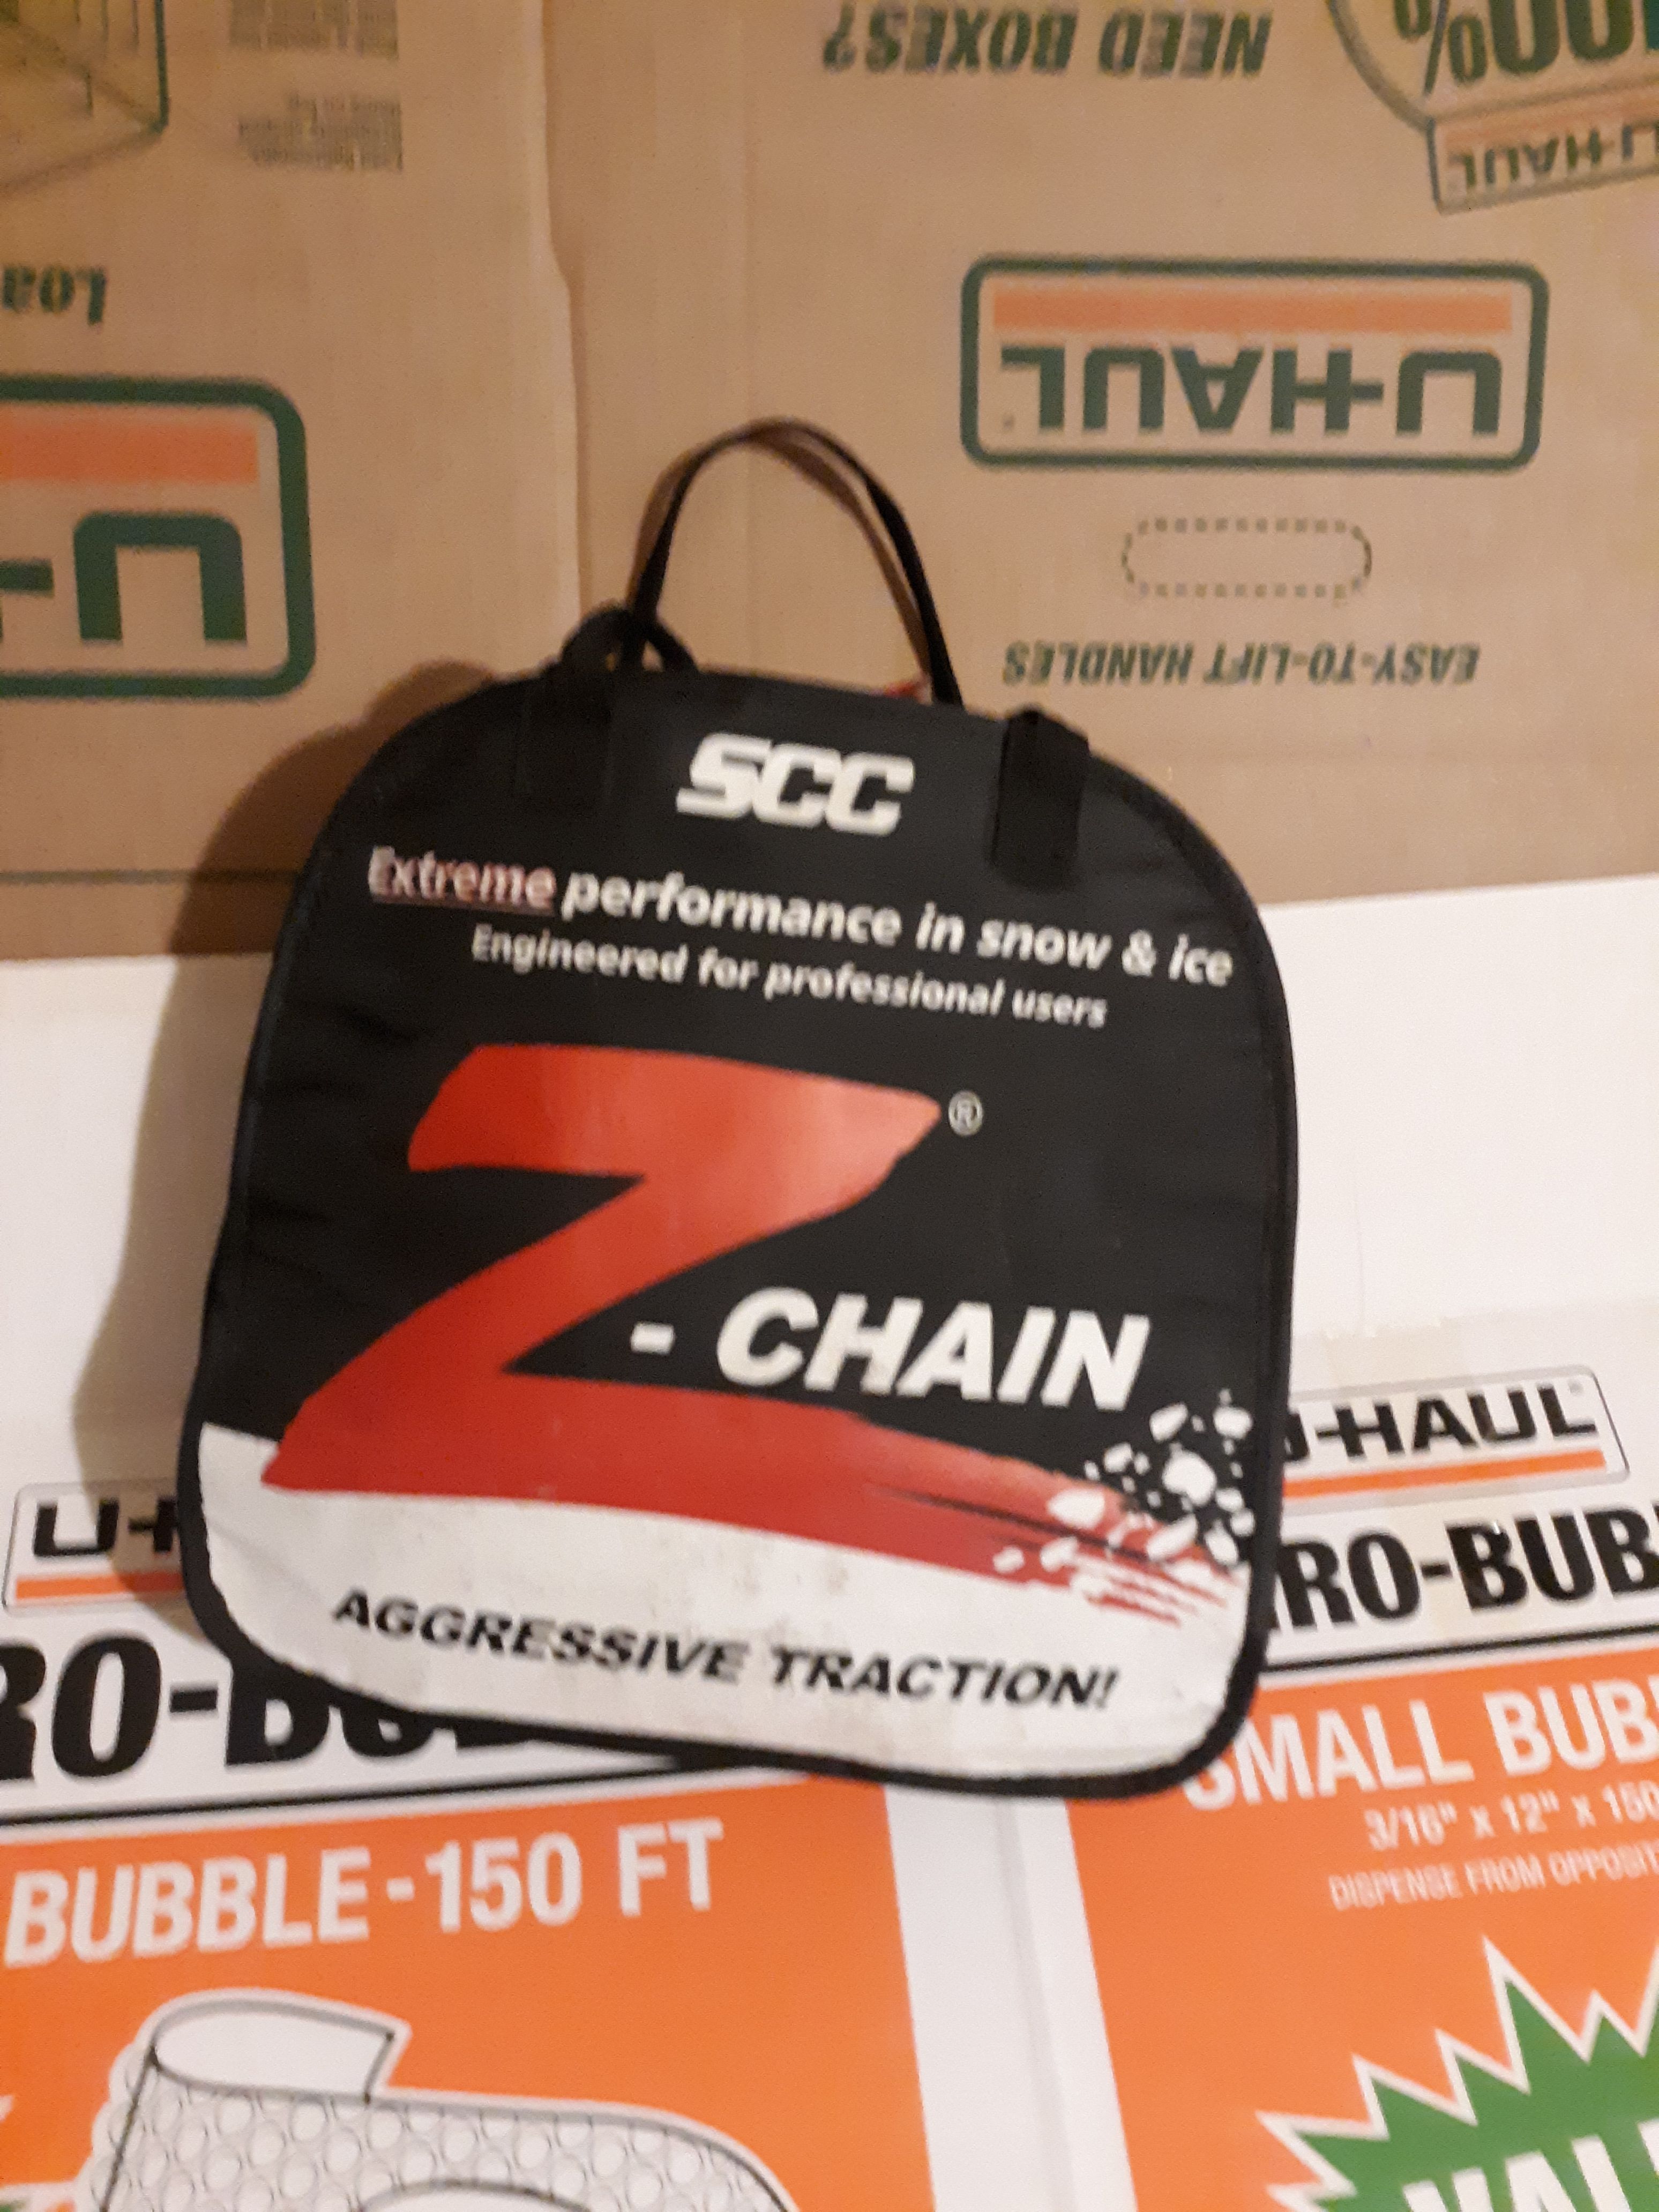 SCC Z Chain Z-555 Class S Snow Tire Cable Chains 15 16 17 18